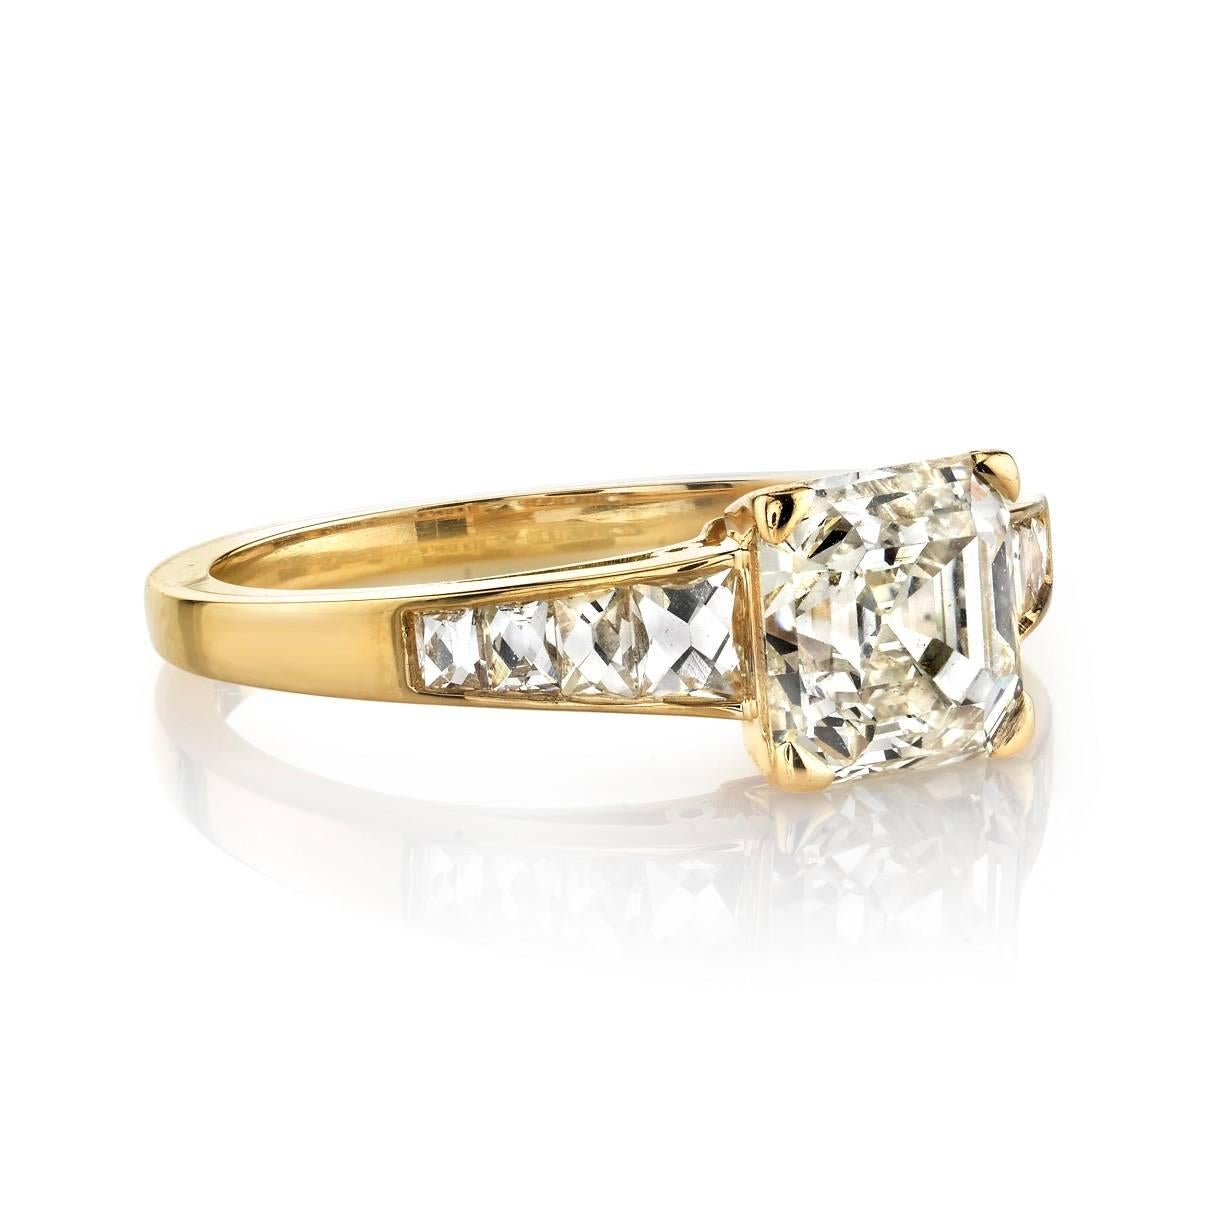 1.57ct J/VS2 EGL certified Asscher cut diamond set in a handcrafted 18k yellow gold mounting.